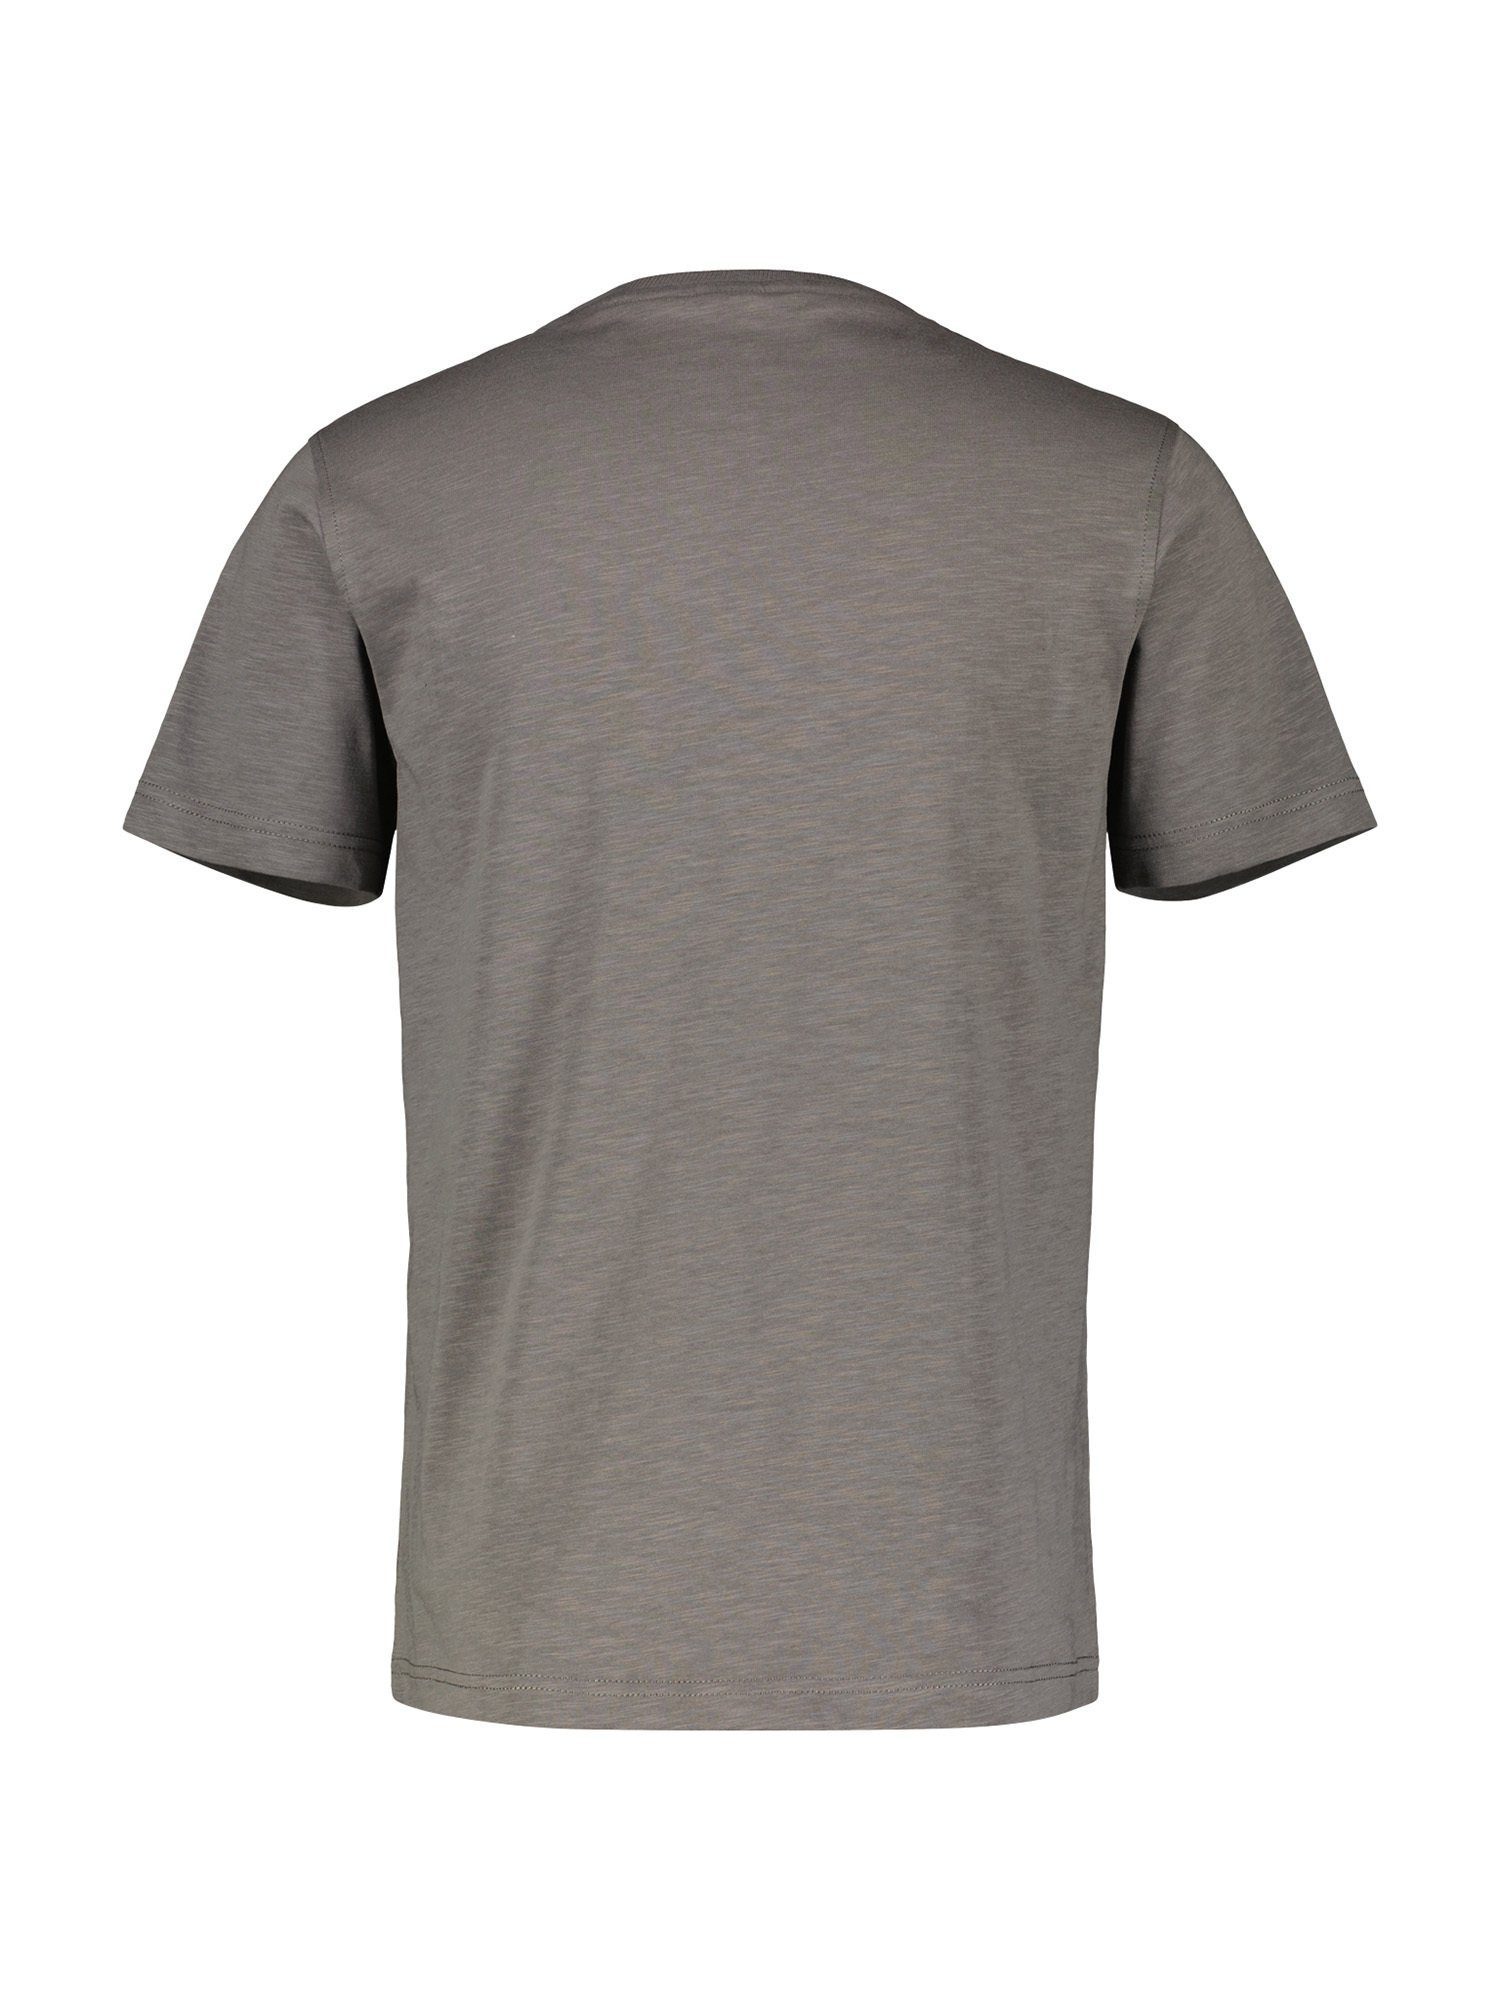 O-Neck GREY T-Shirt LERROS Brustprint LERROS BASALT T-Shirt,